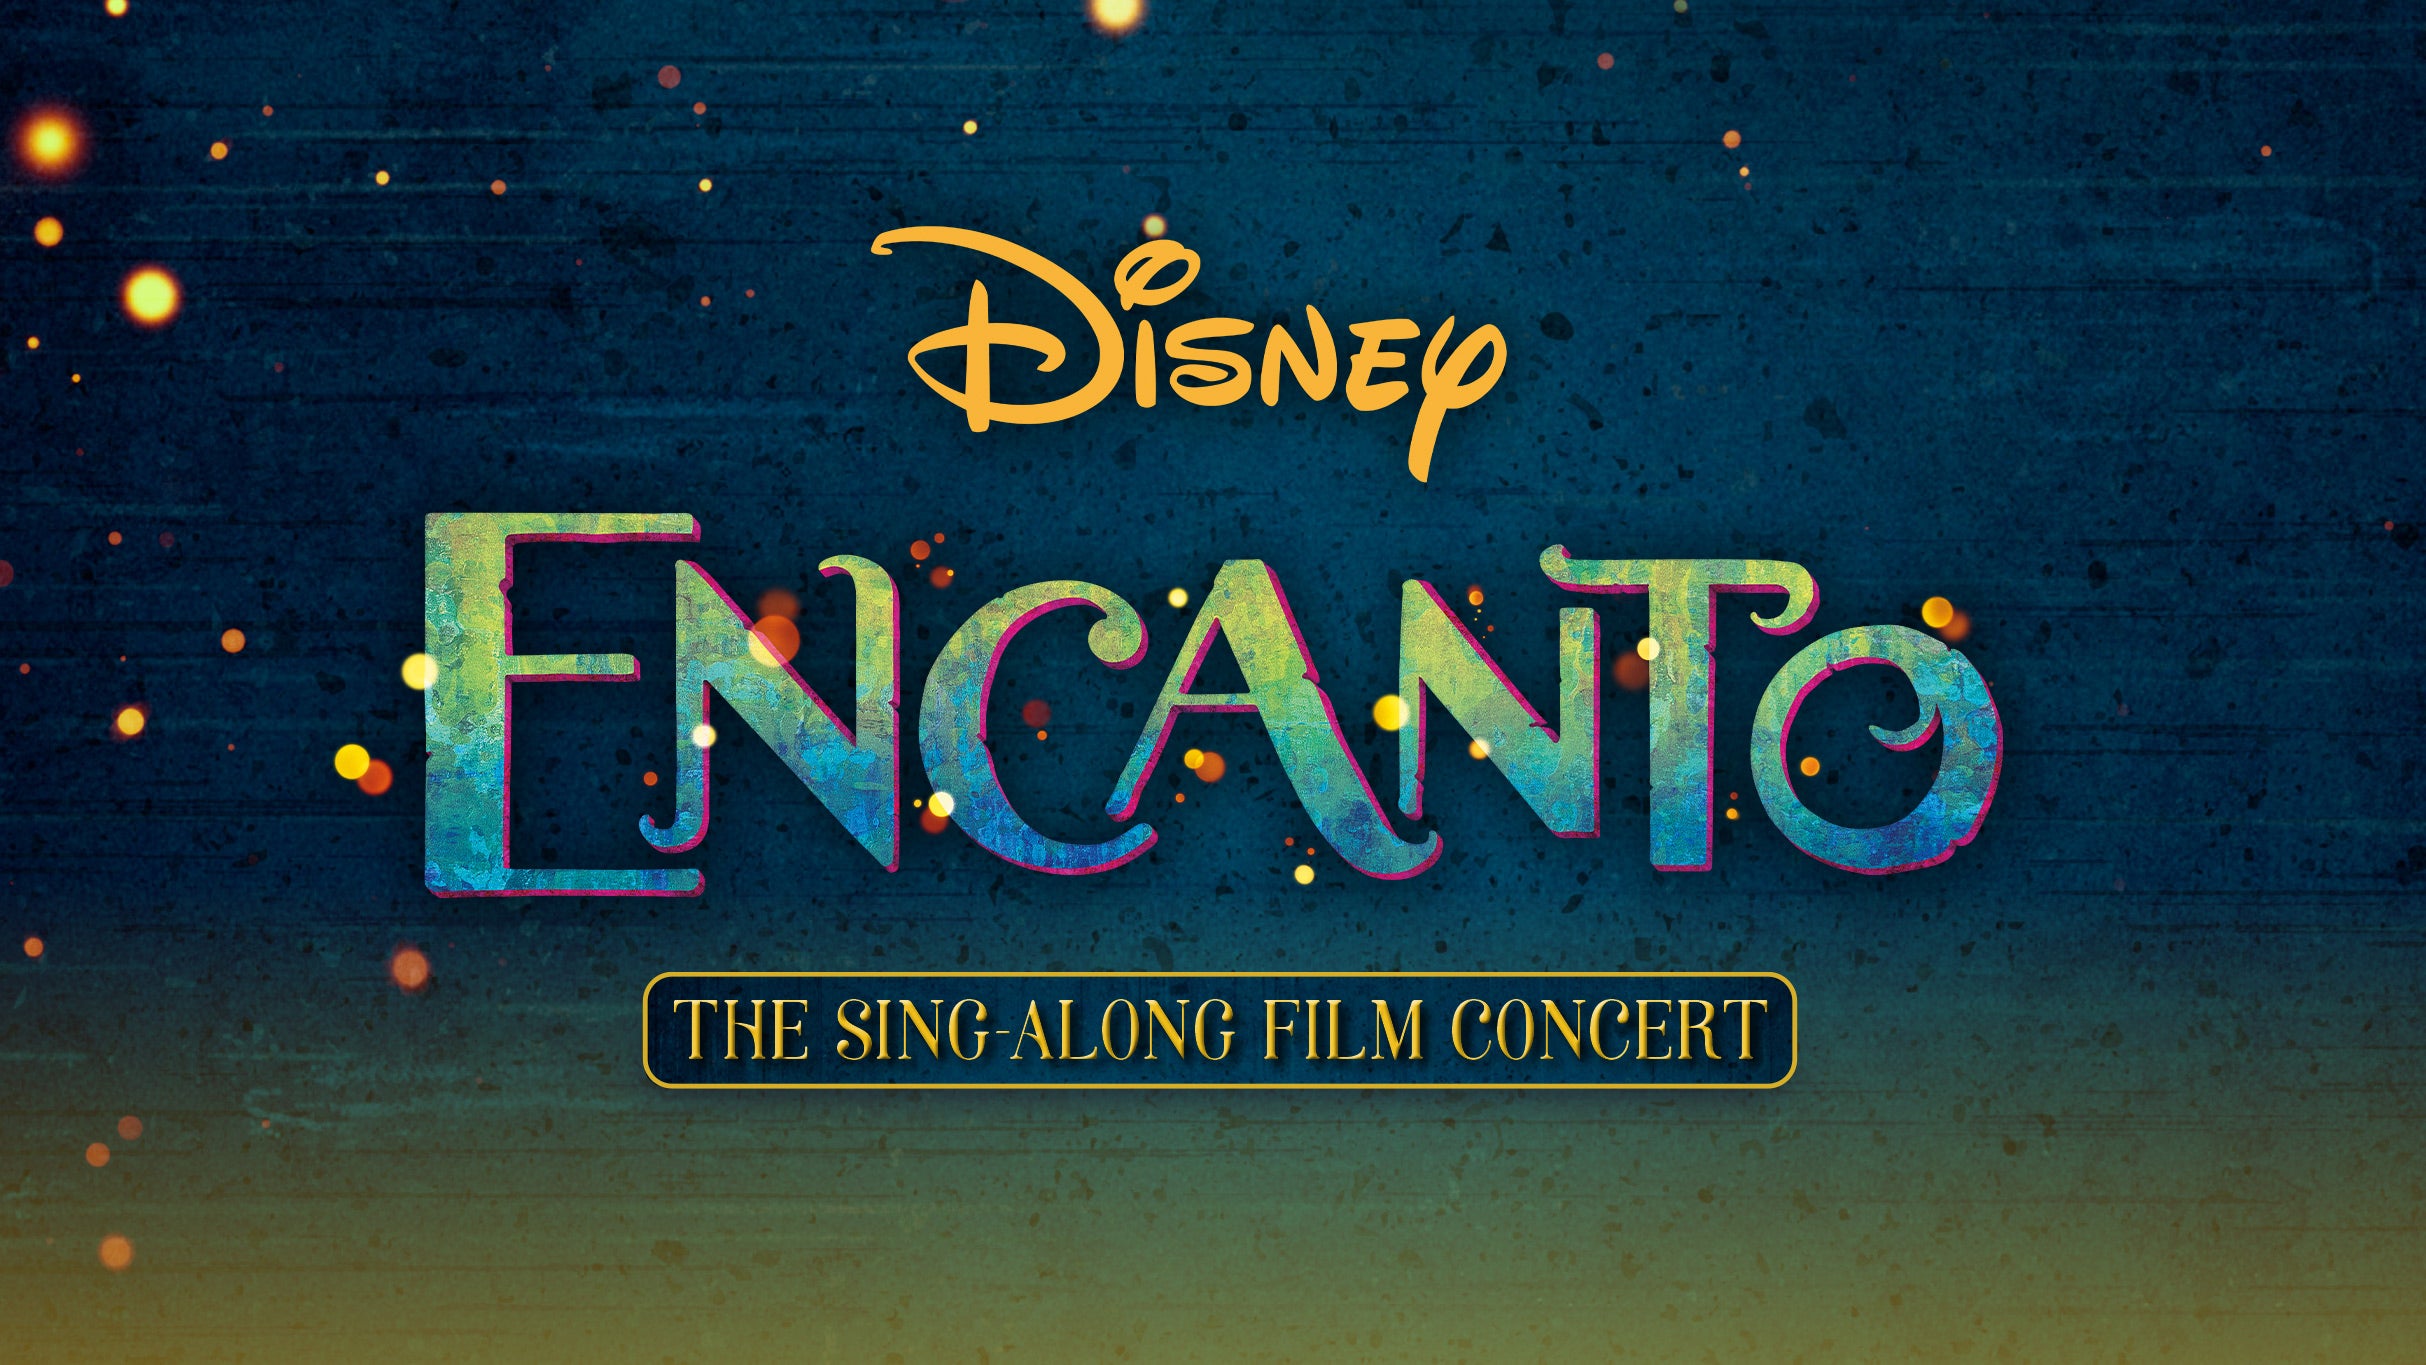 Encanto: The Sing Along Film Concert in El Paso event information